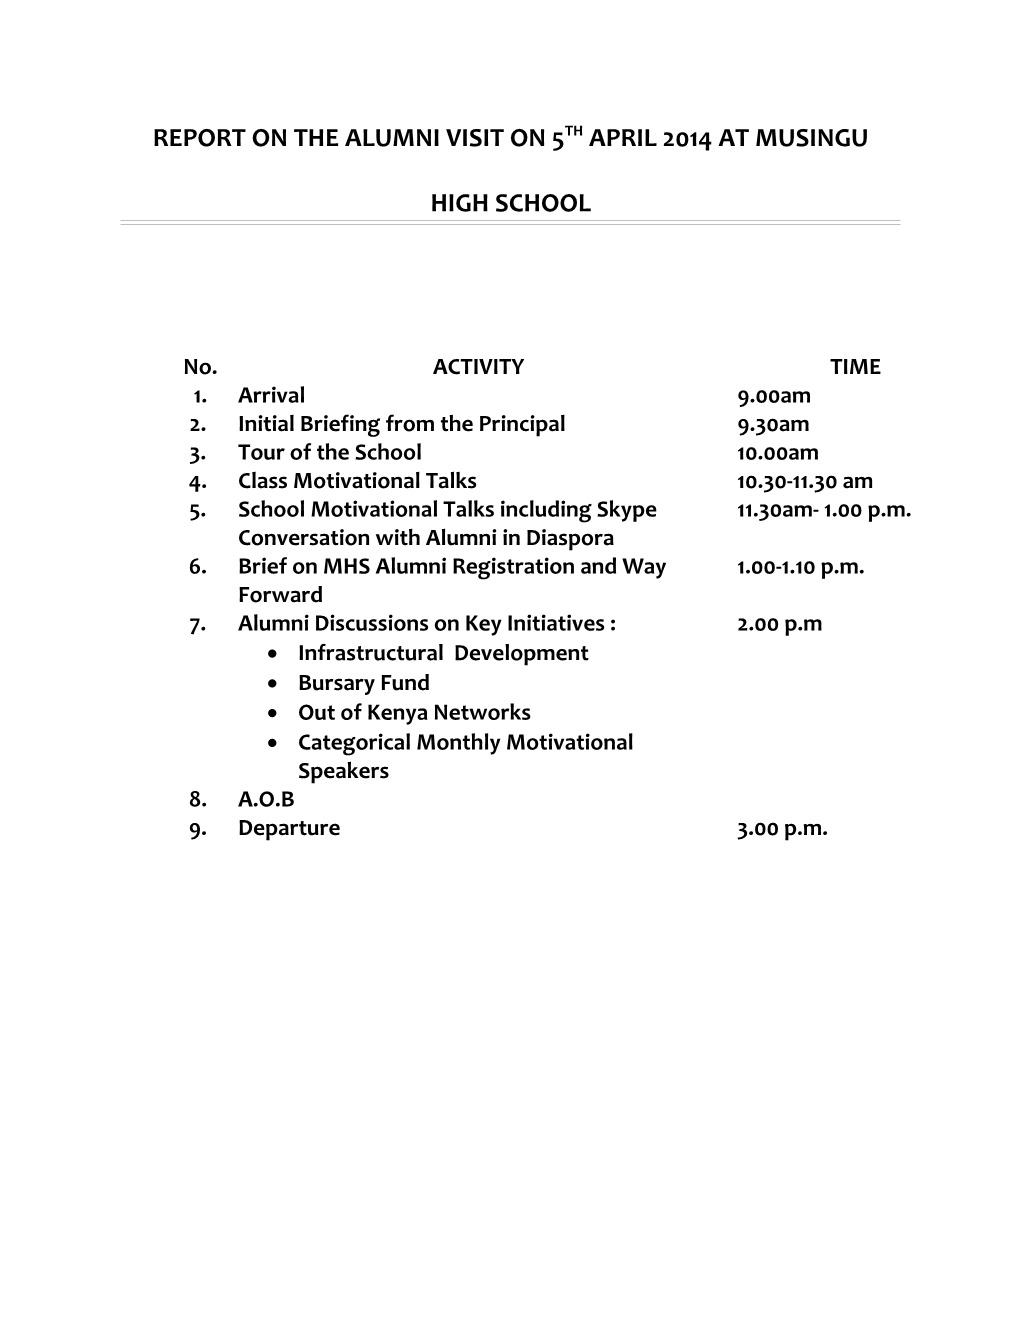 Report on the Alumni Visit on 5Th April 2014 at Musingu High School